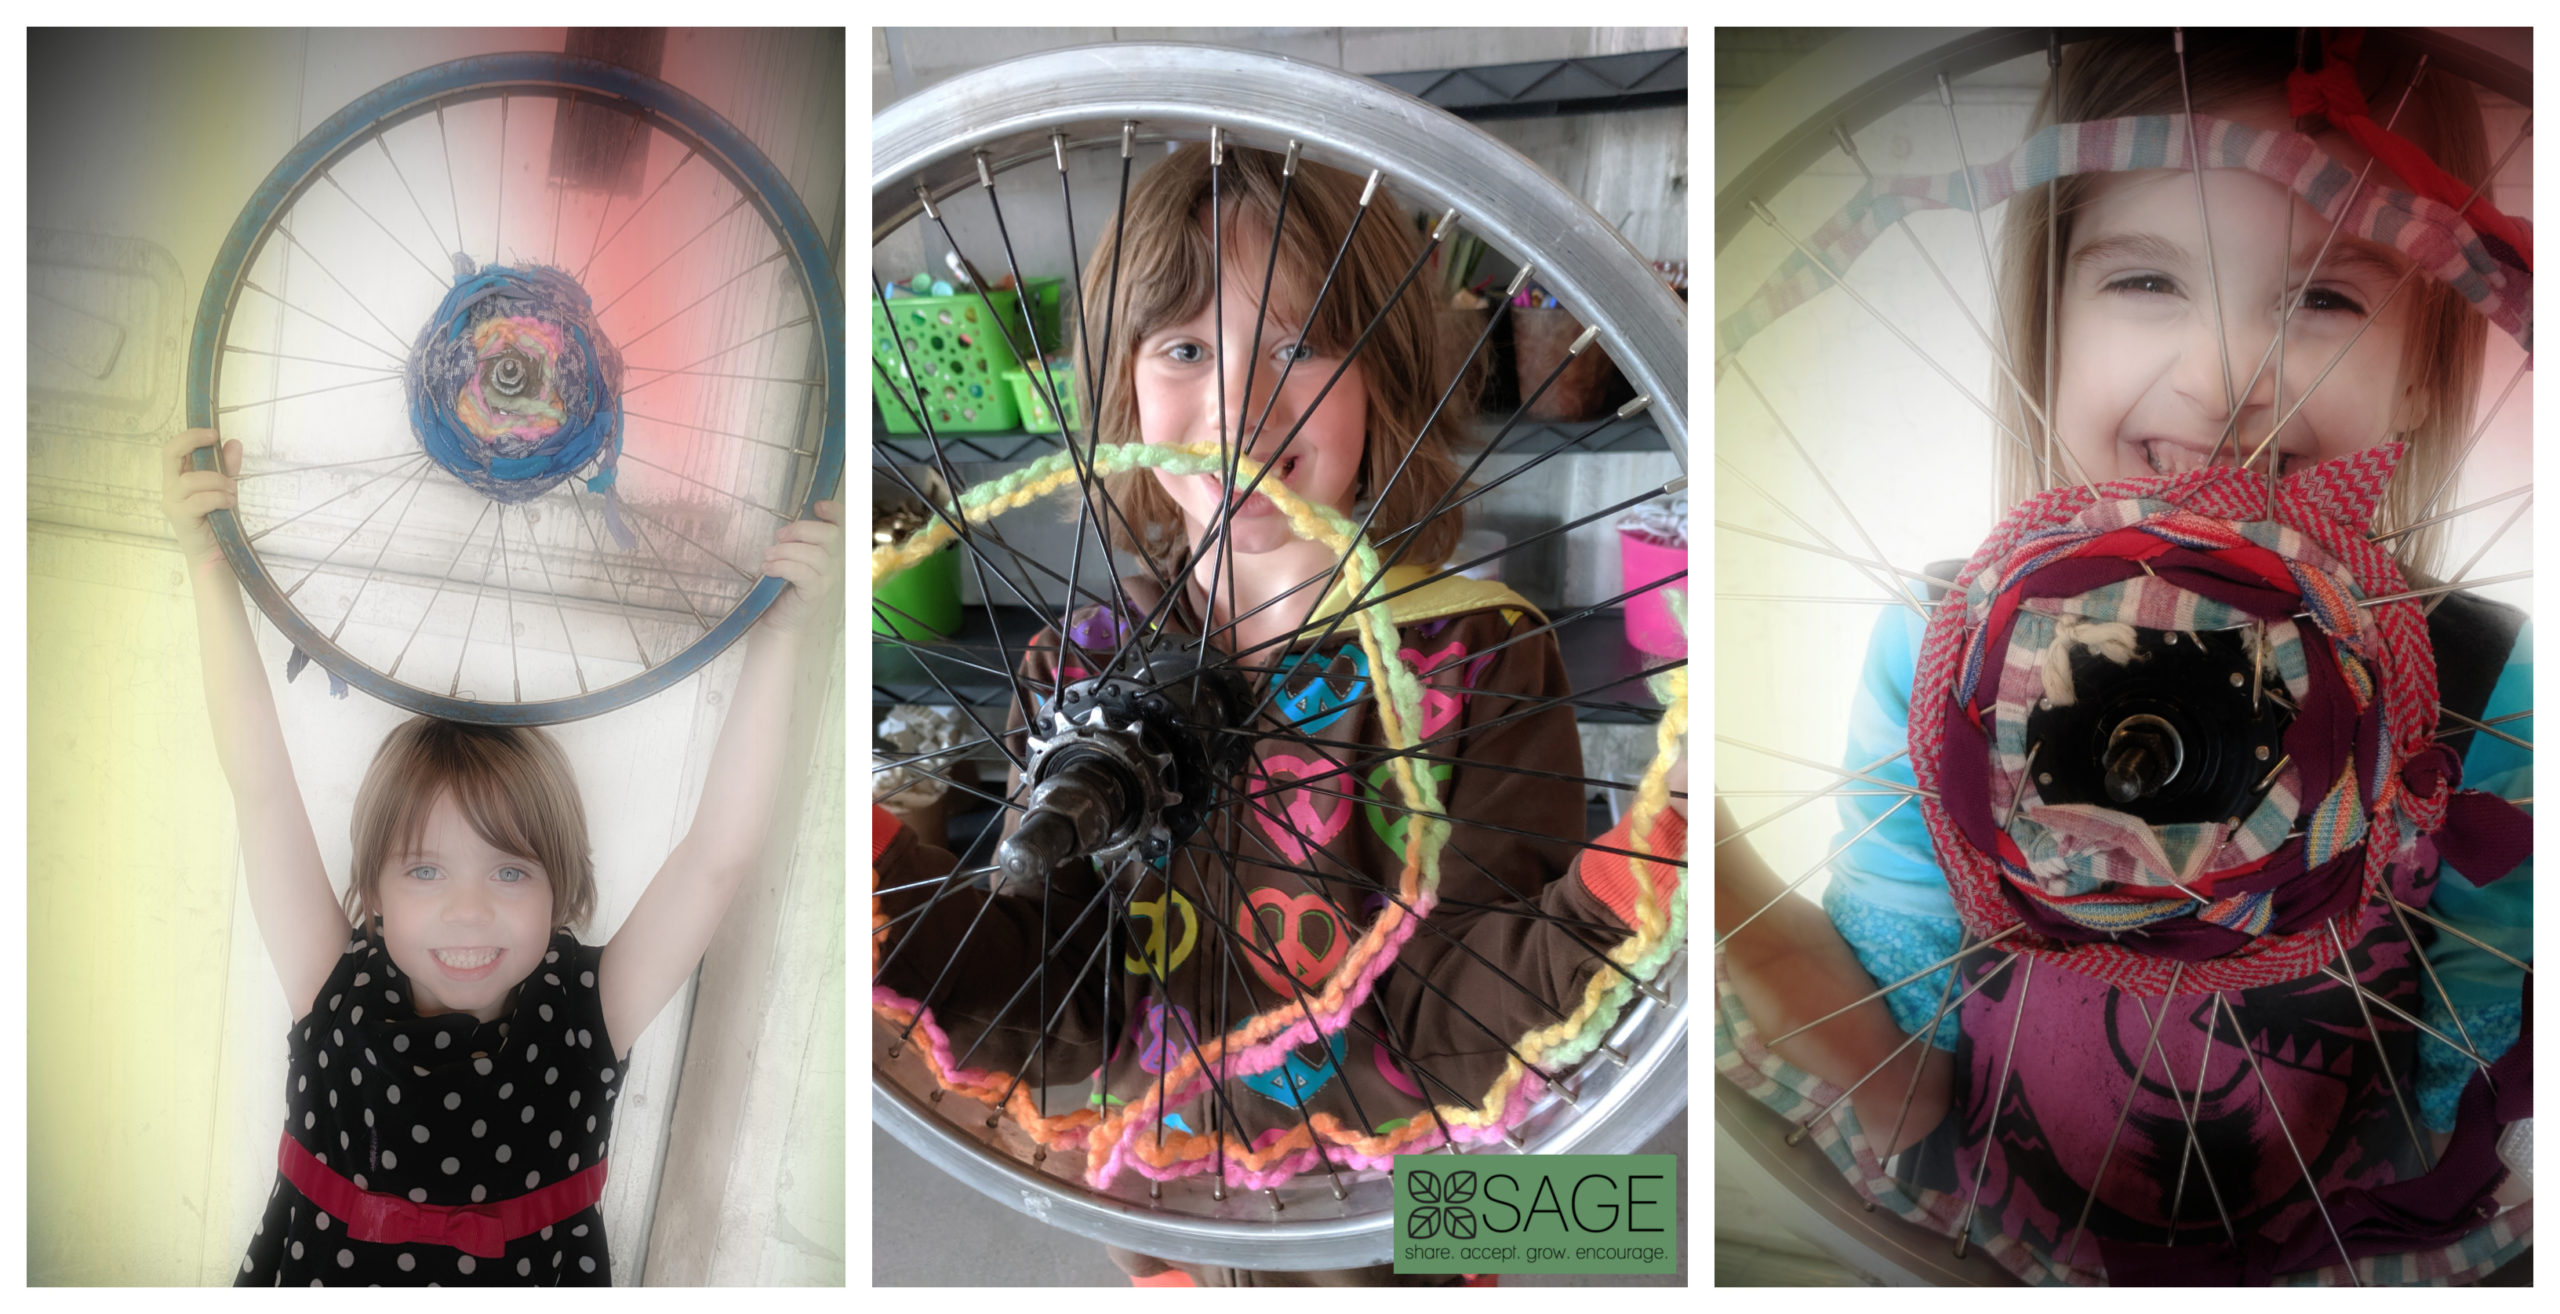 3 children holding art wheel collages, satisfaction found in motherhood